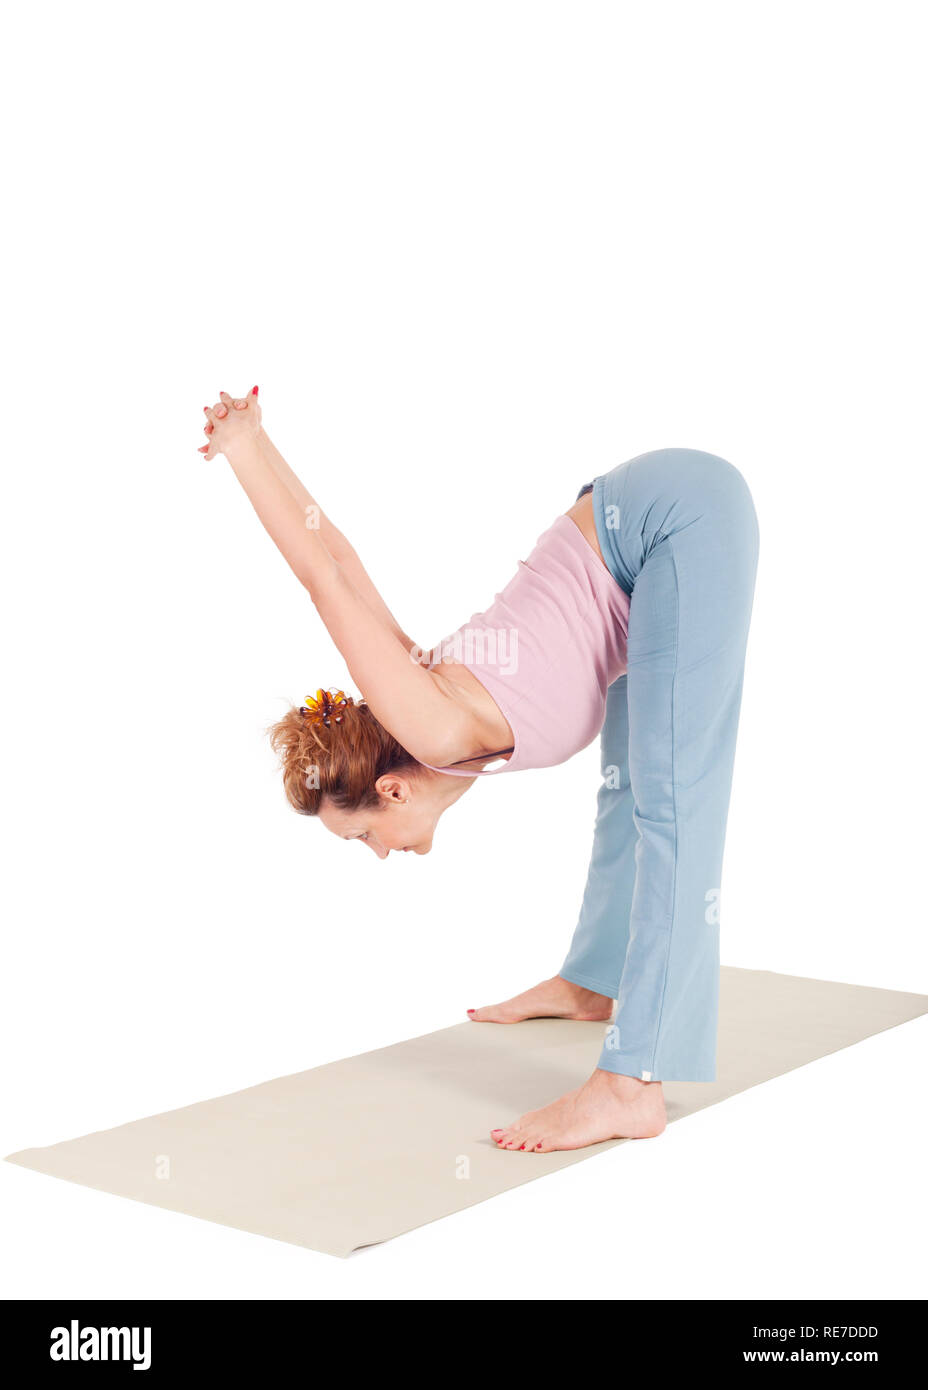 Slim woman doing yoga in Wide Legged Forward Bend pose · Free